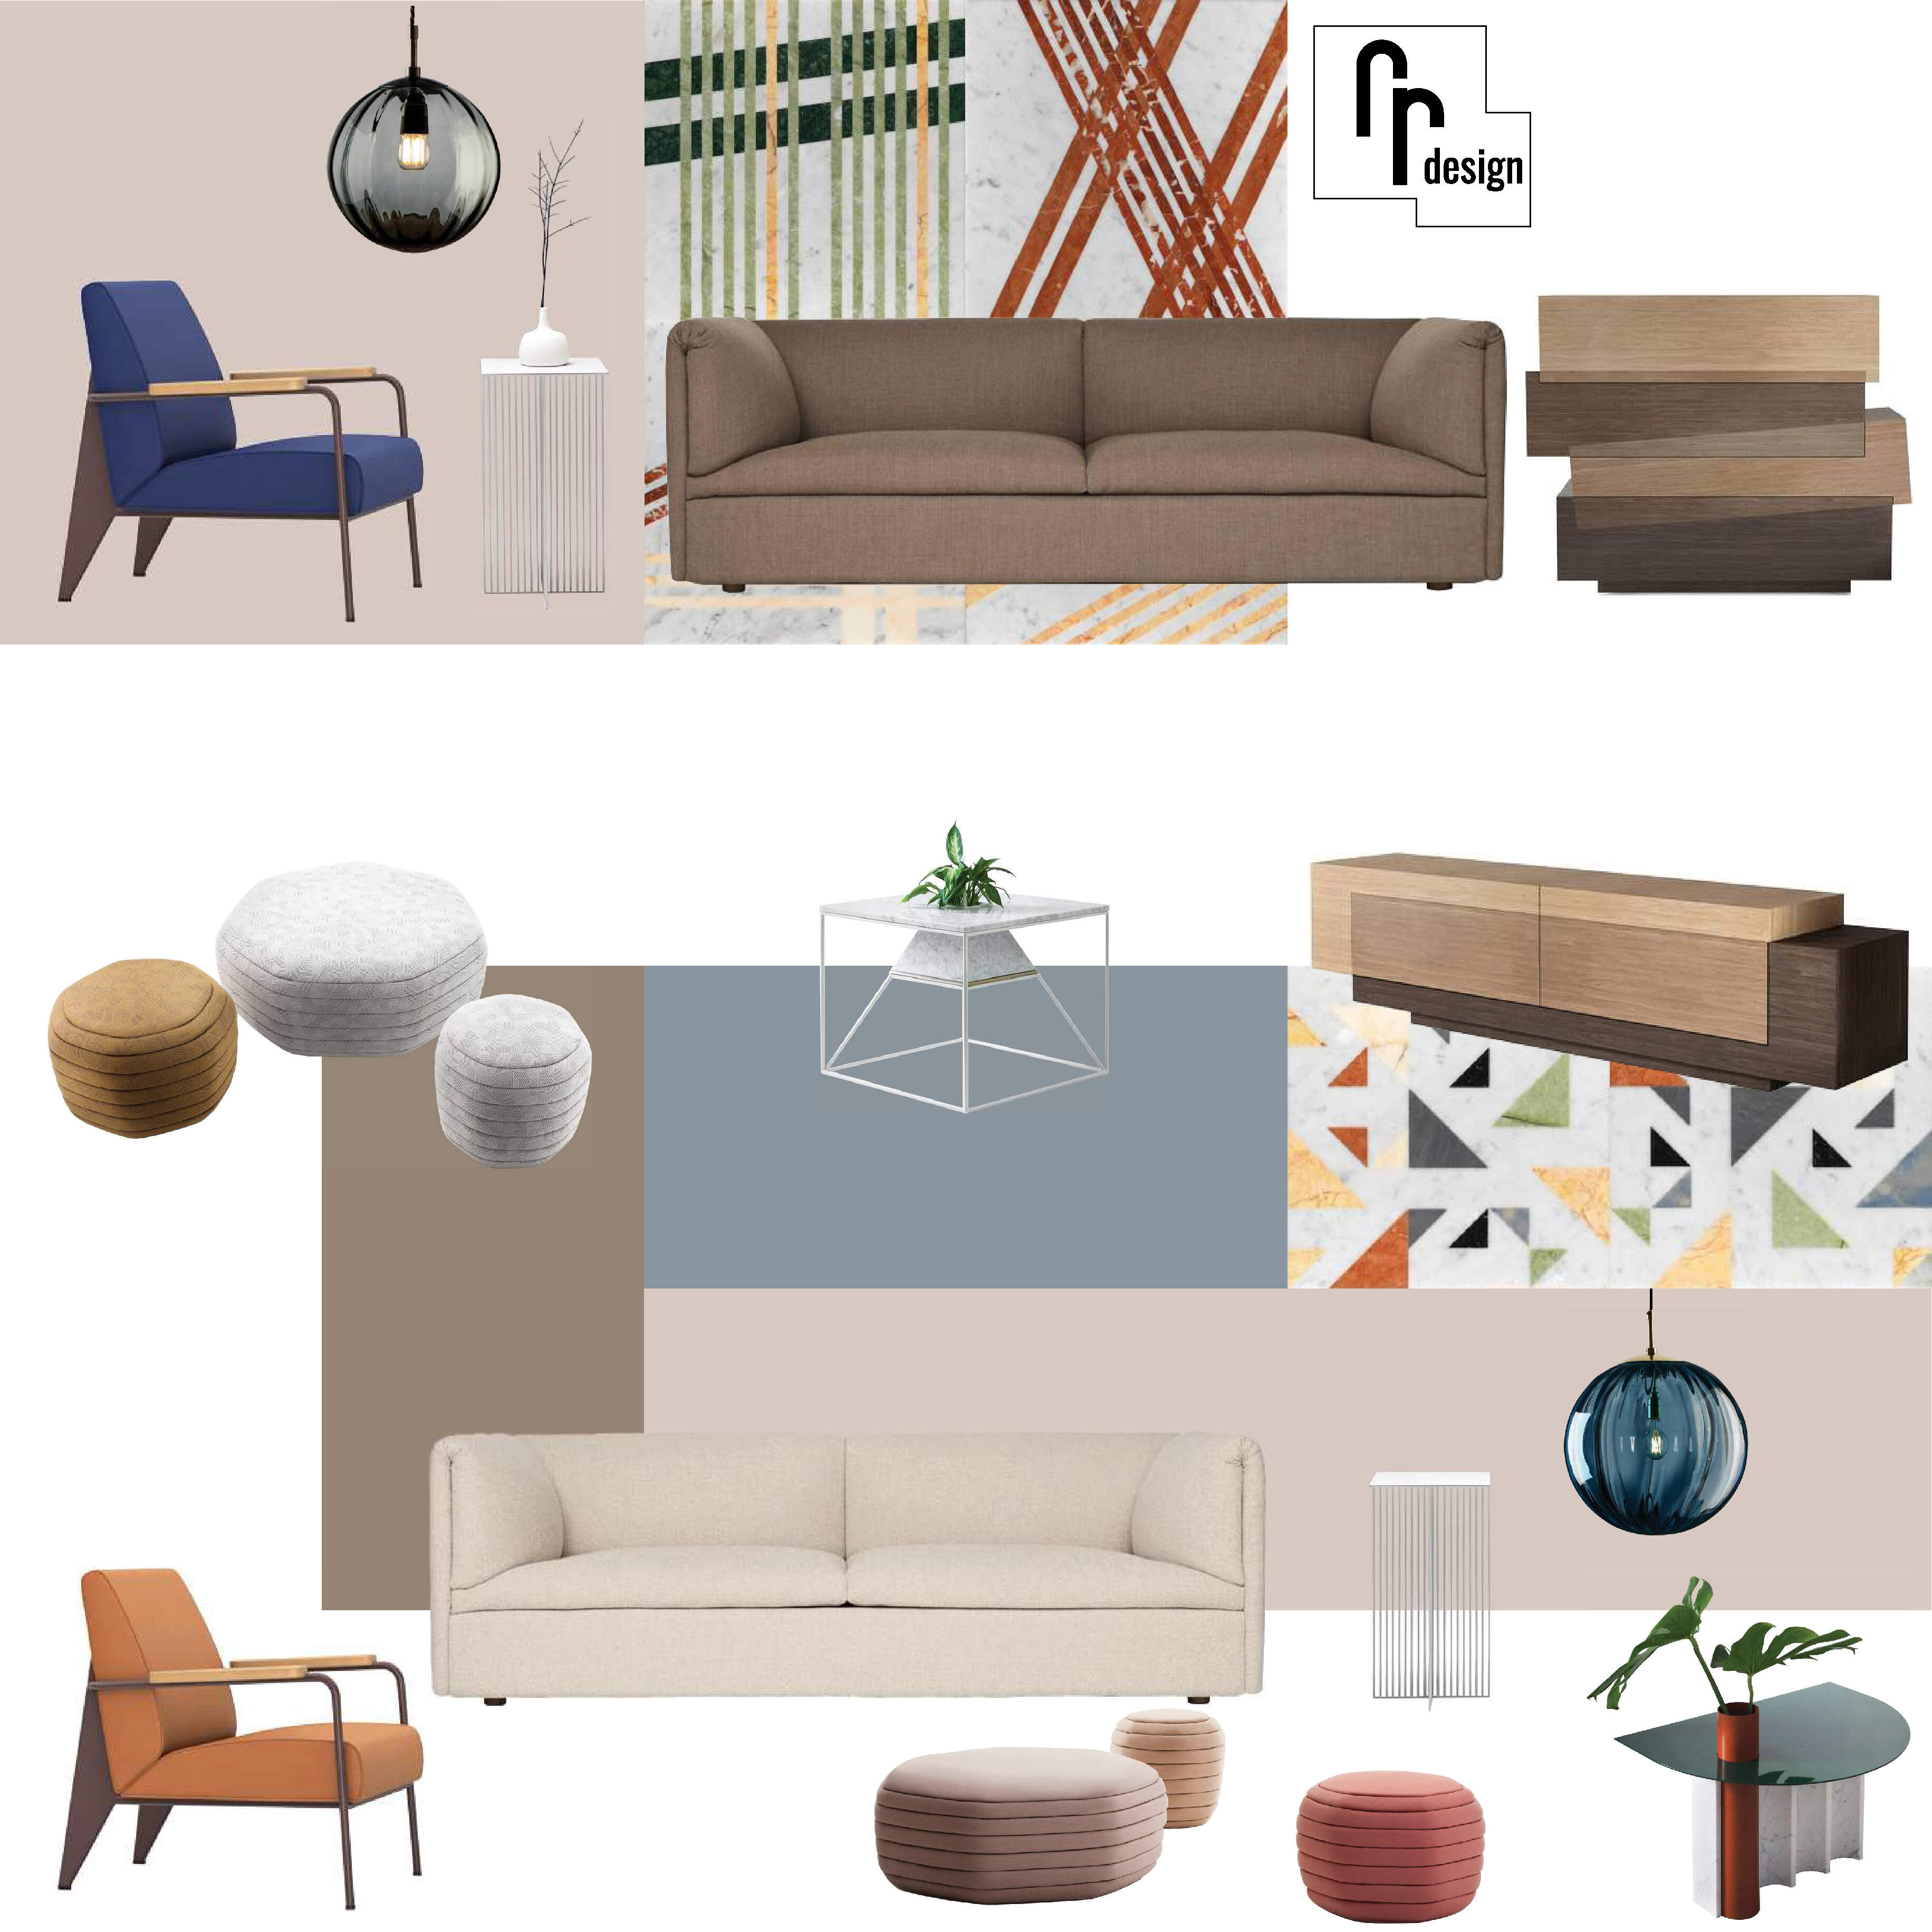 SUMMER BREEZE - Living room design board